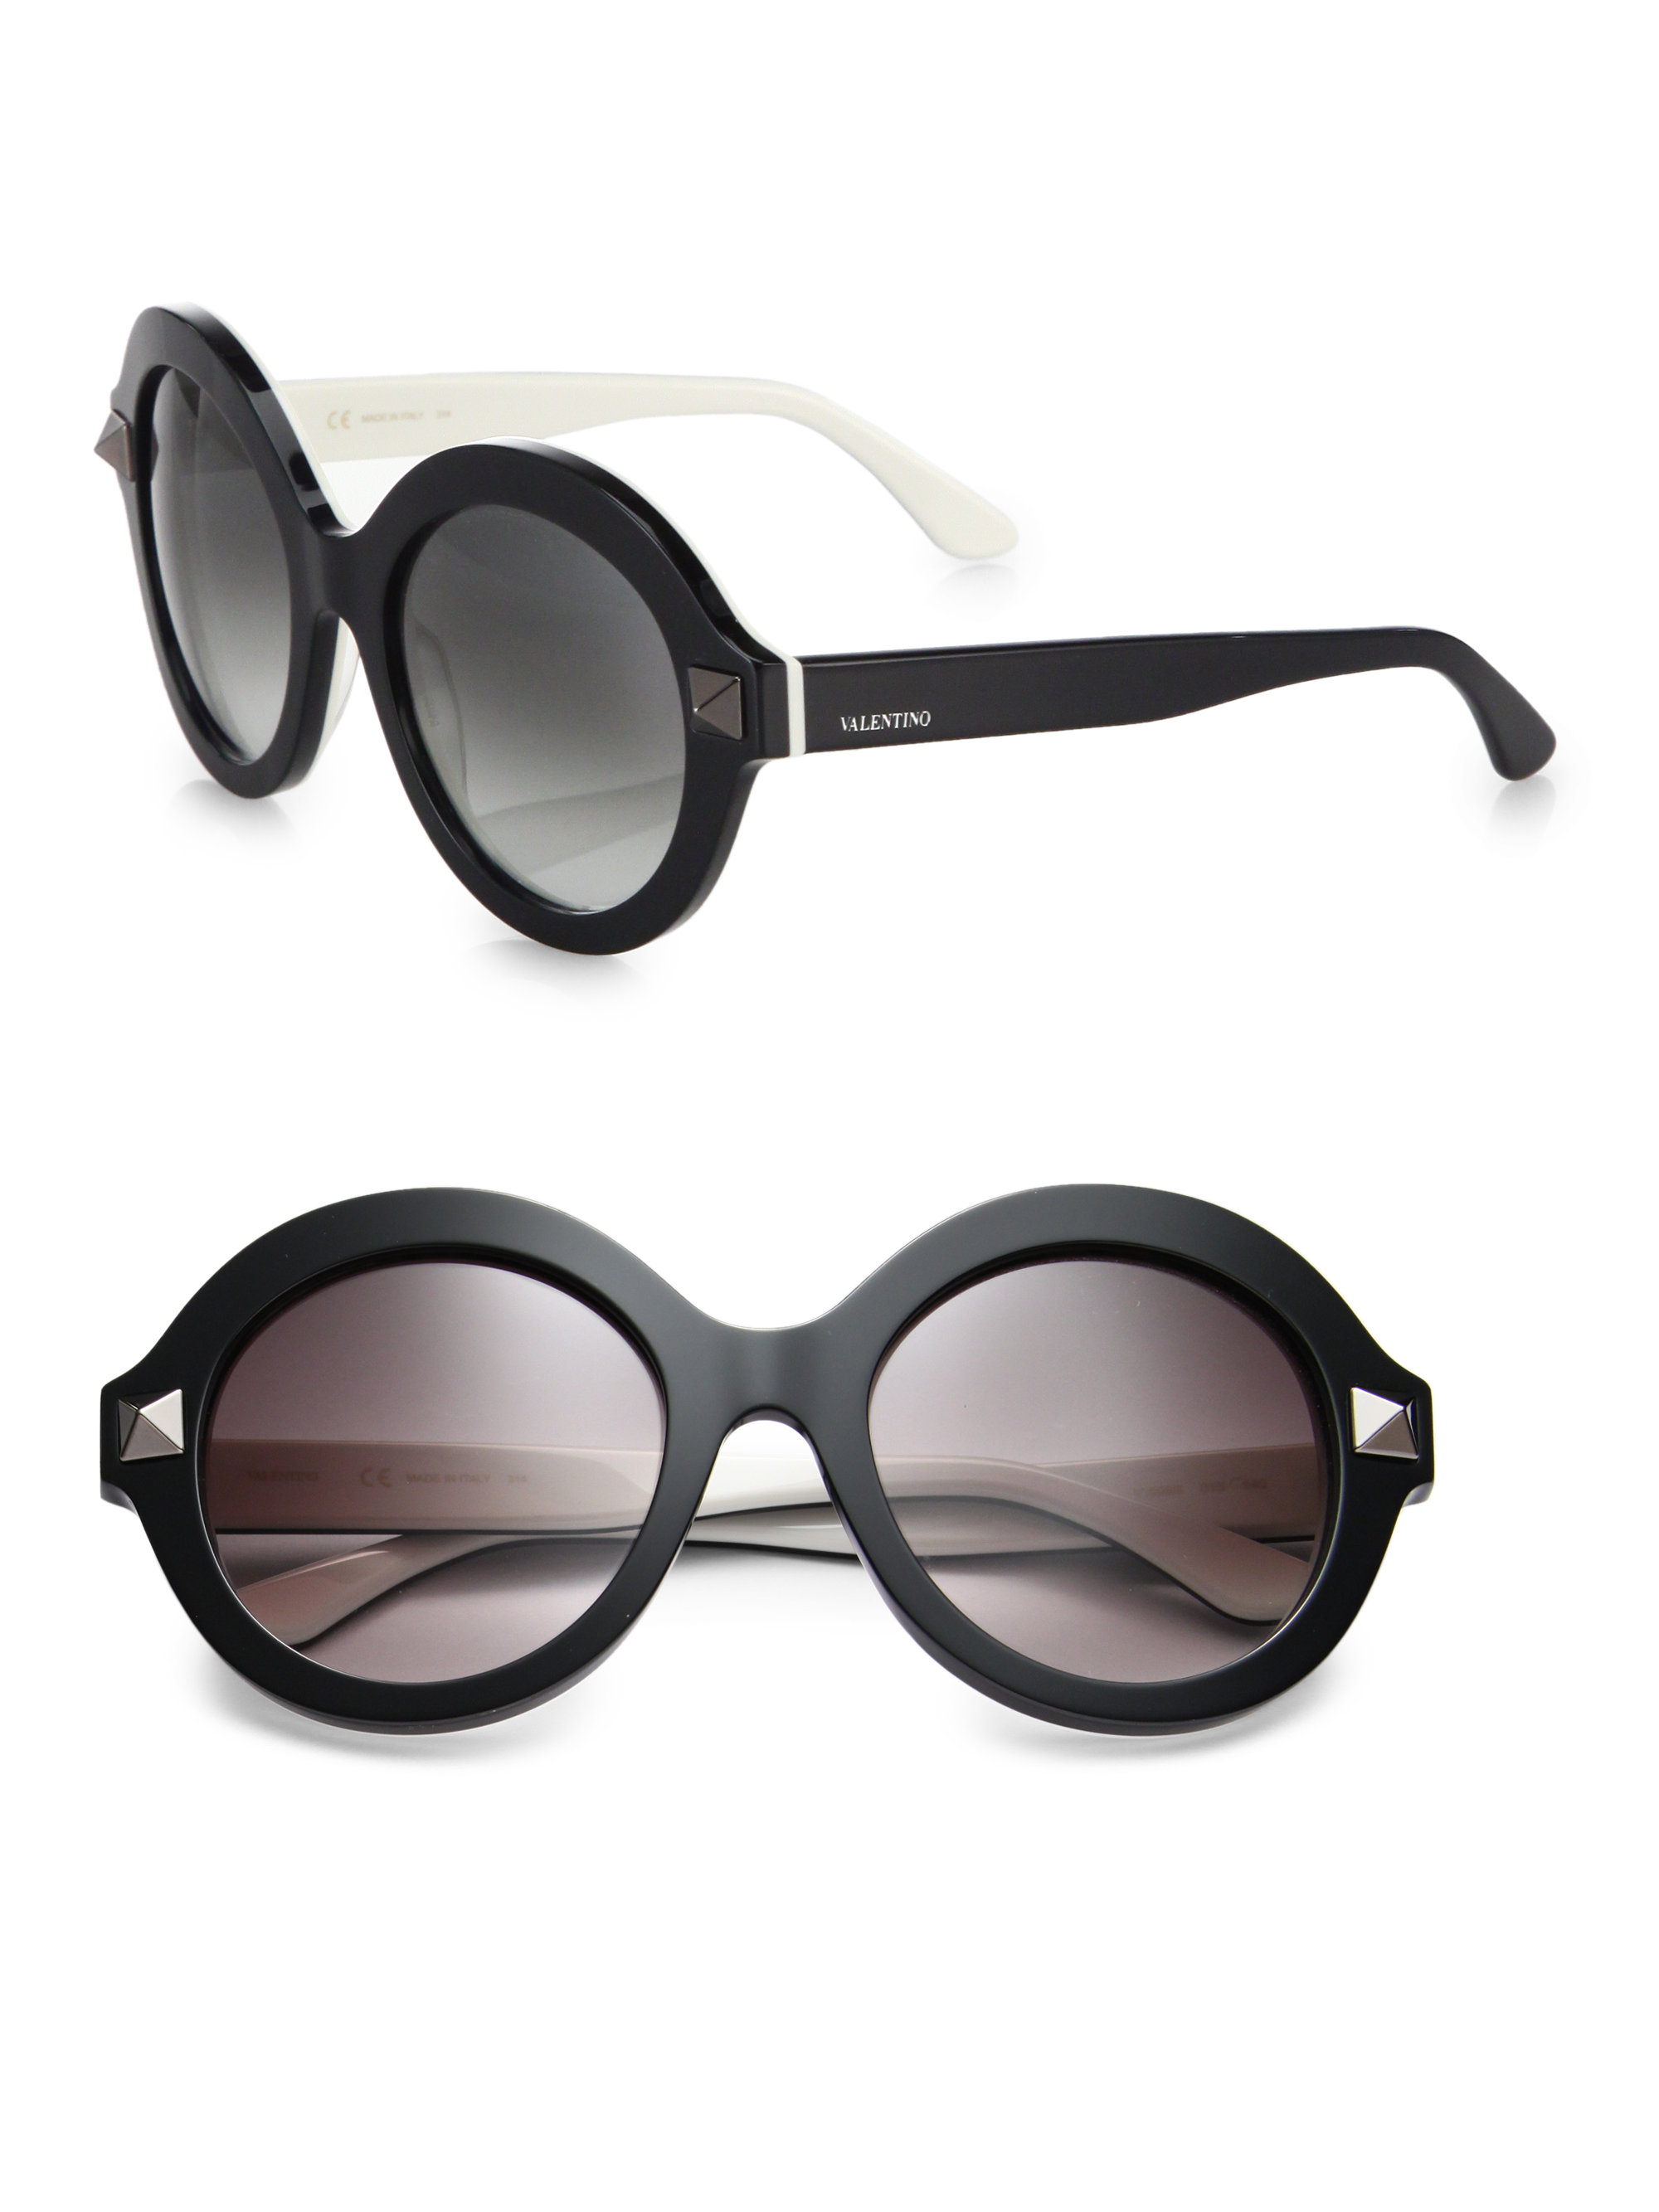 Valentino Garavani Rockstud 54Mm Round Sunglasses in Black-White (Black ...